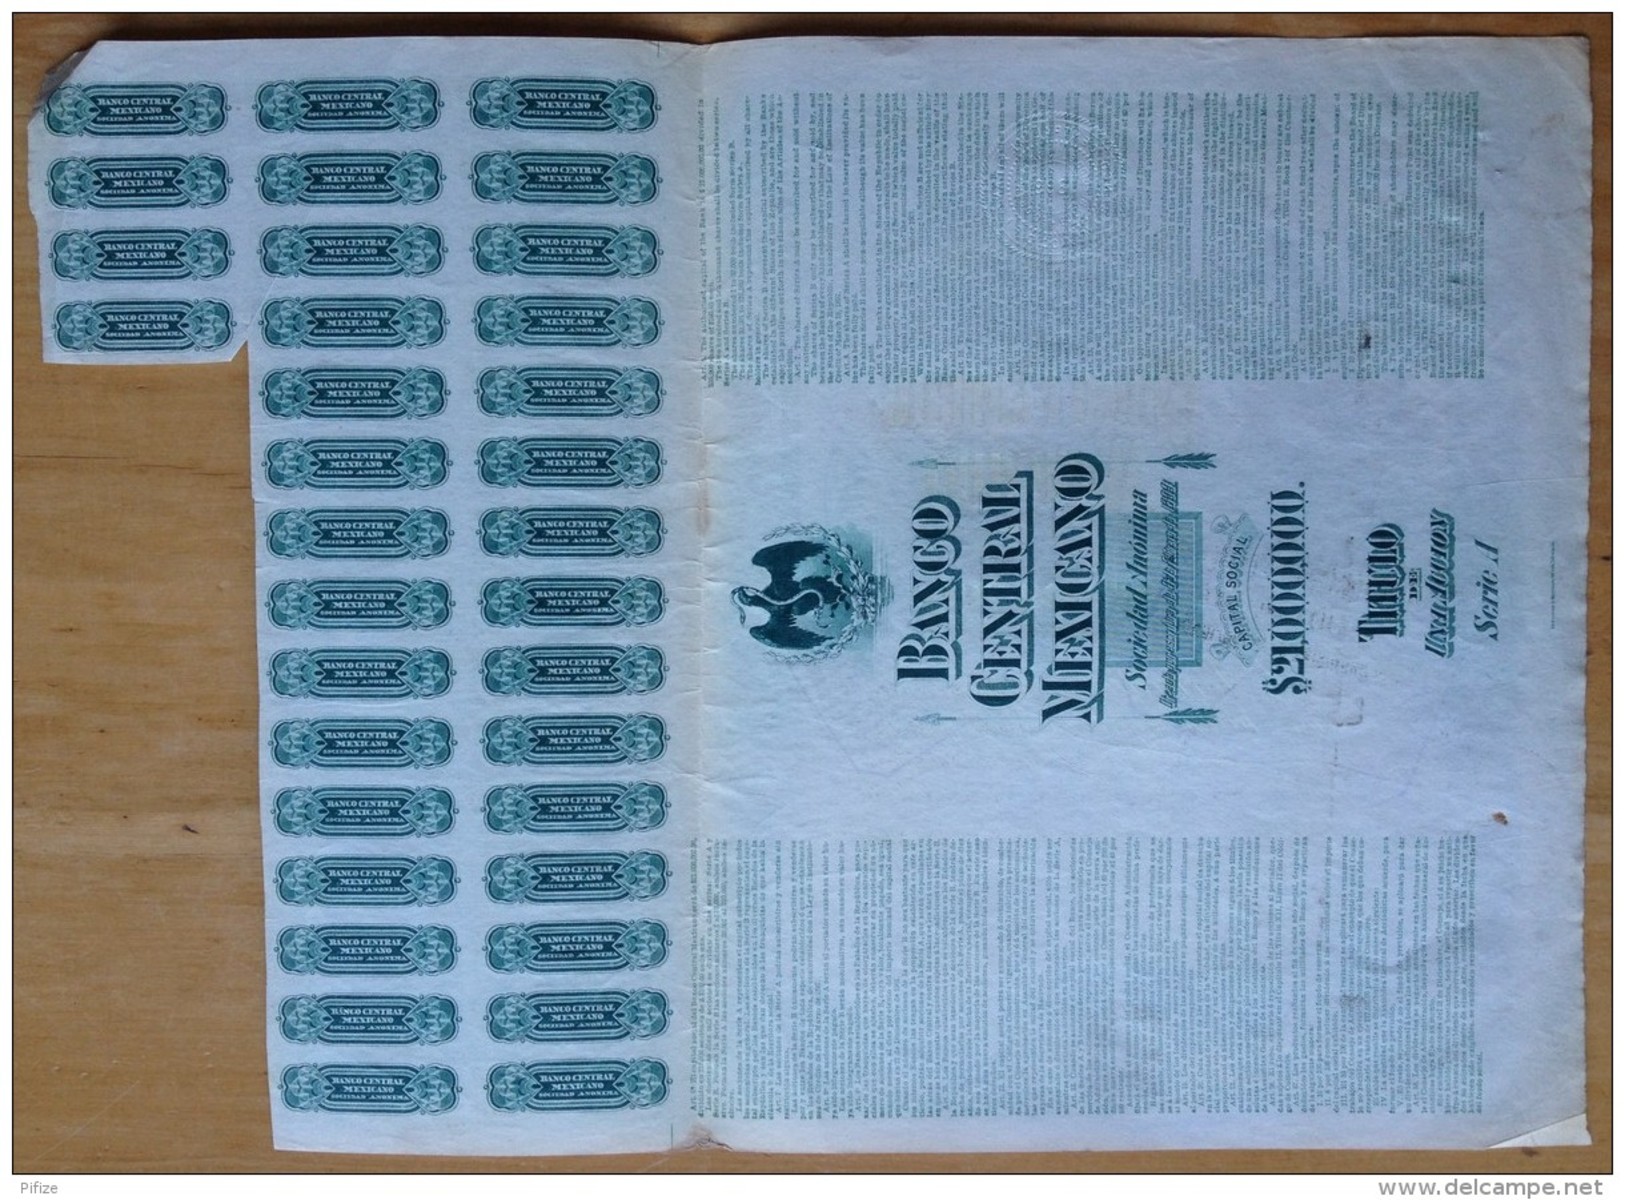 Banco Central Mexicano. Banque Centrale Du Mexique. Action De 100 Pesos 1905. - Bank & Insurance